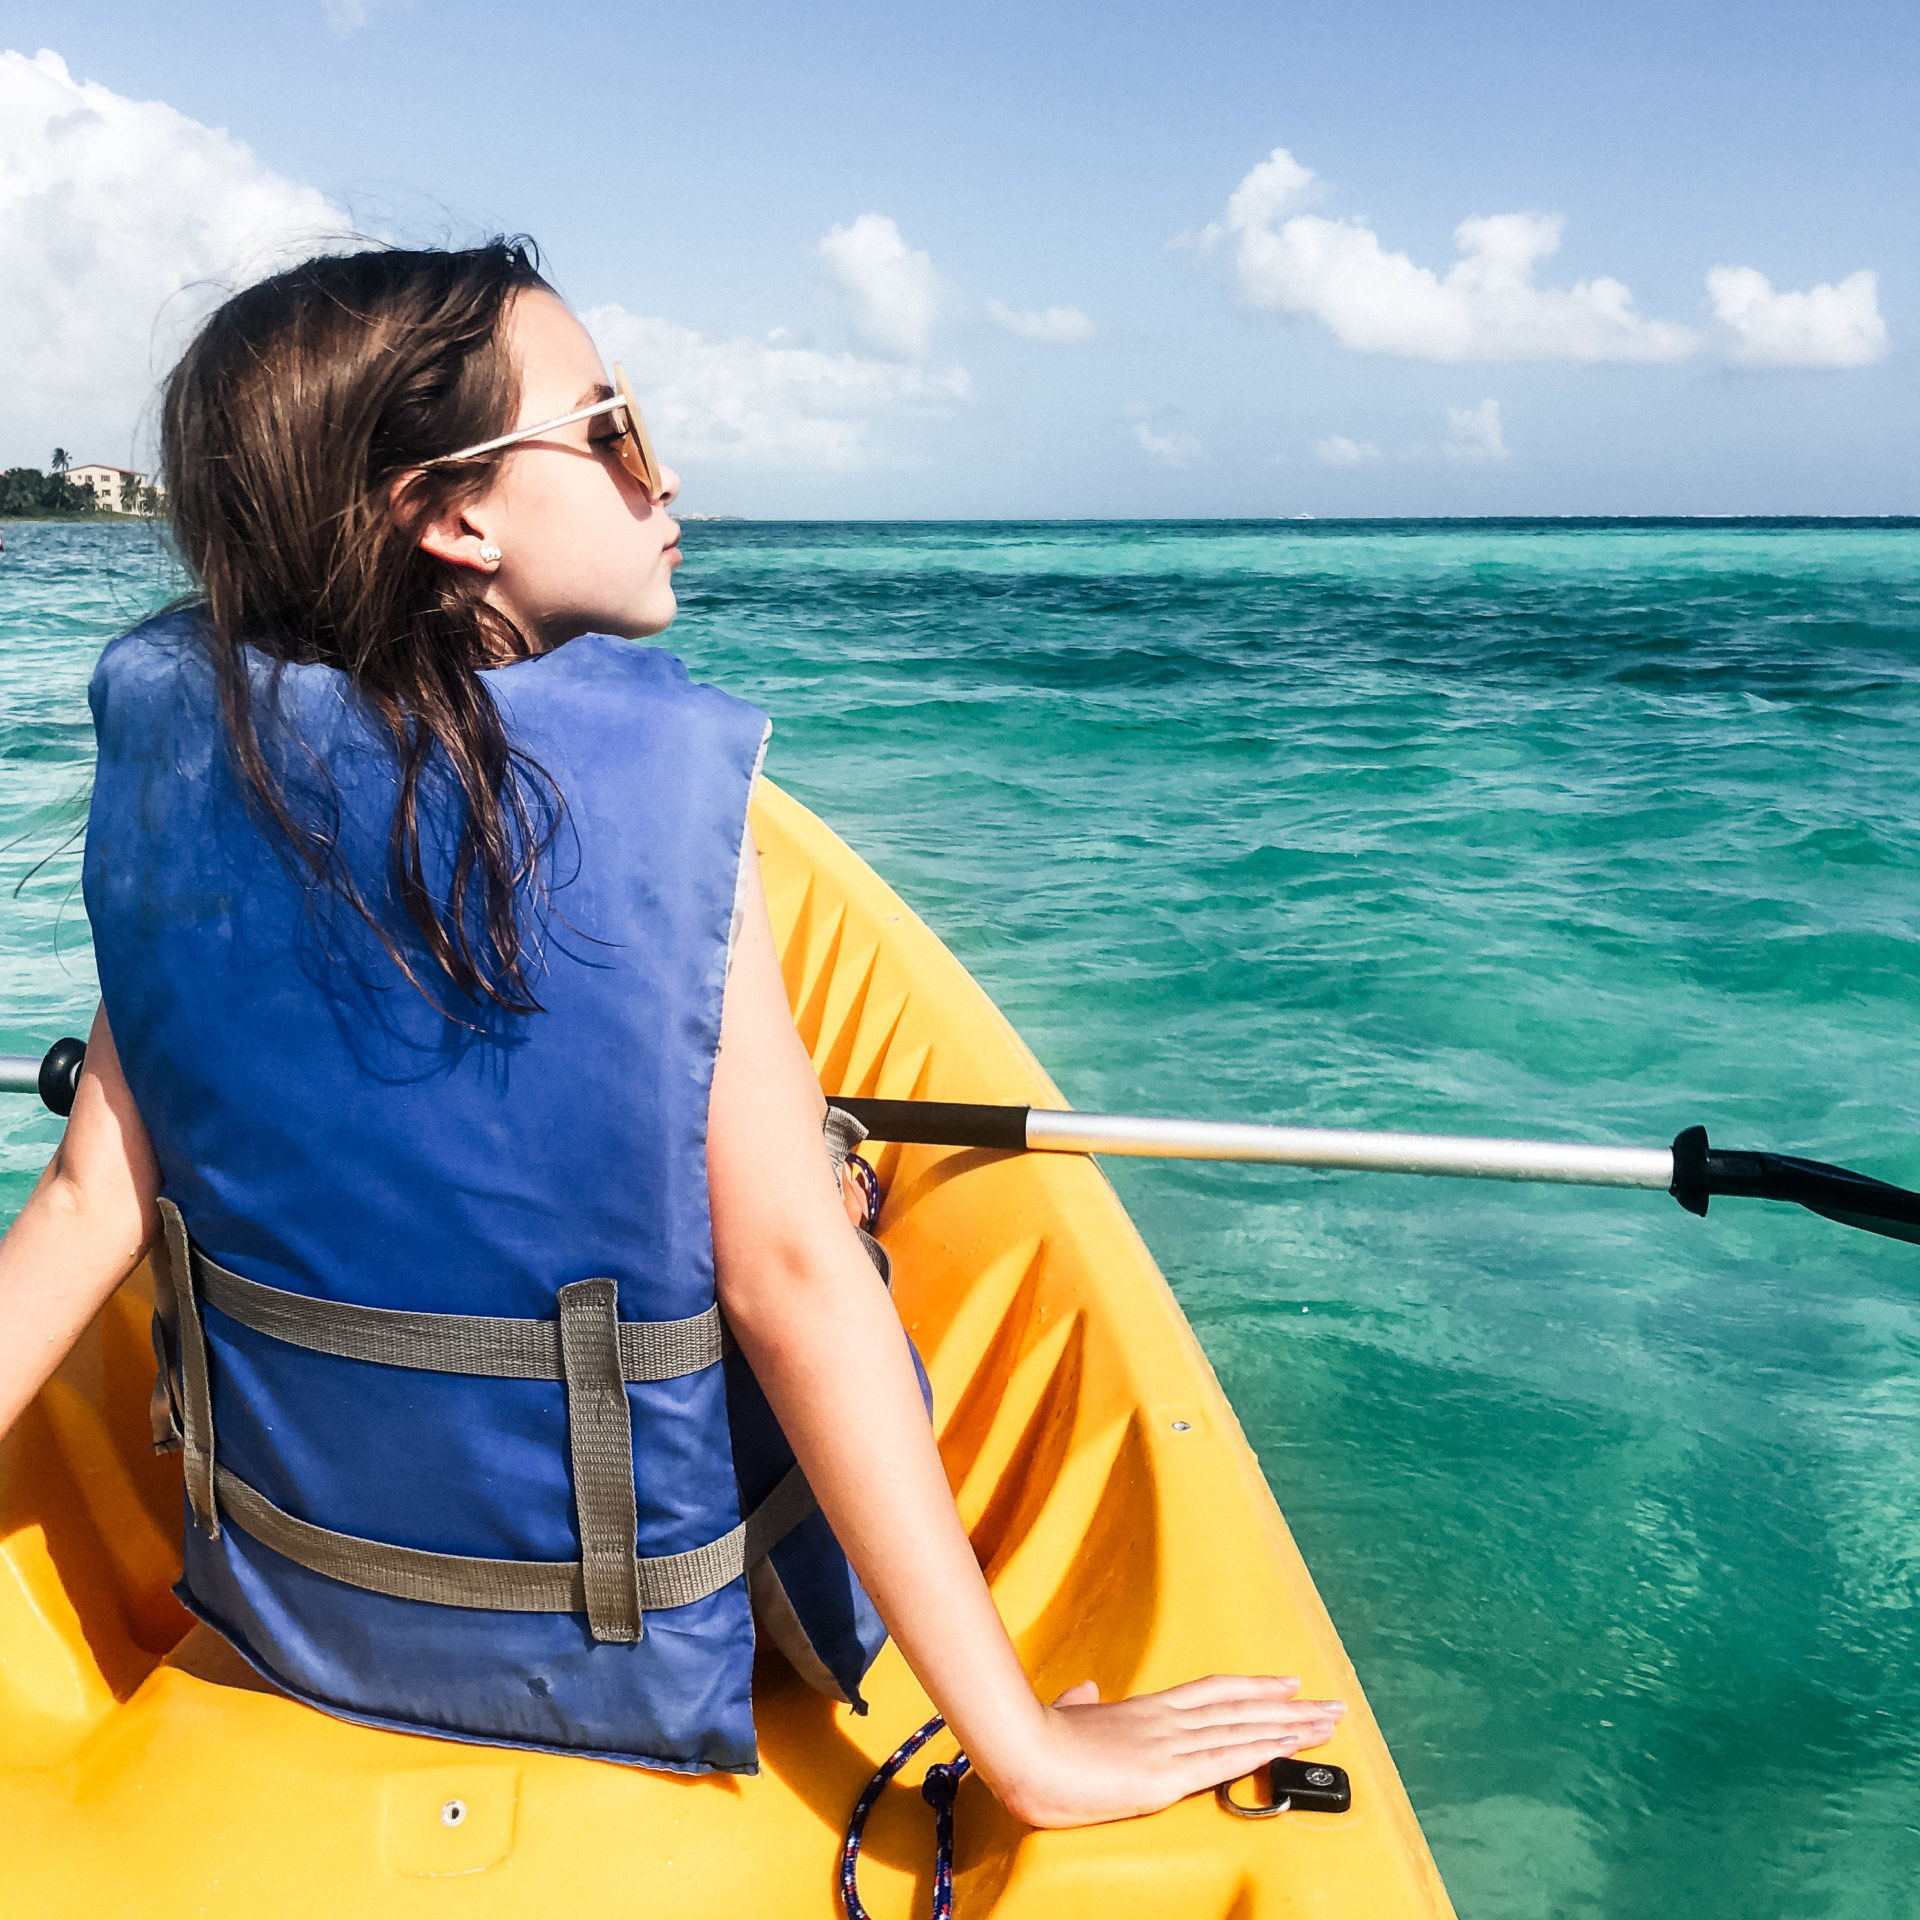 Lisa Breckenridge kayaking with family in Belize